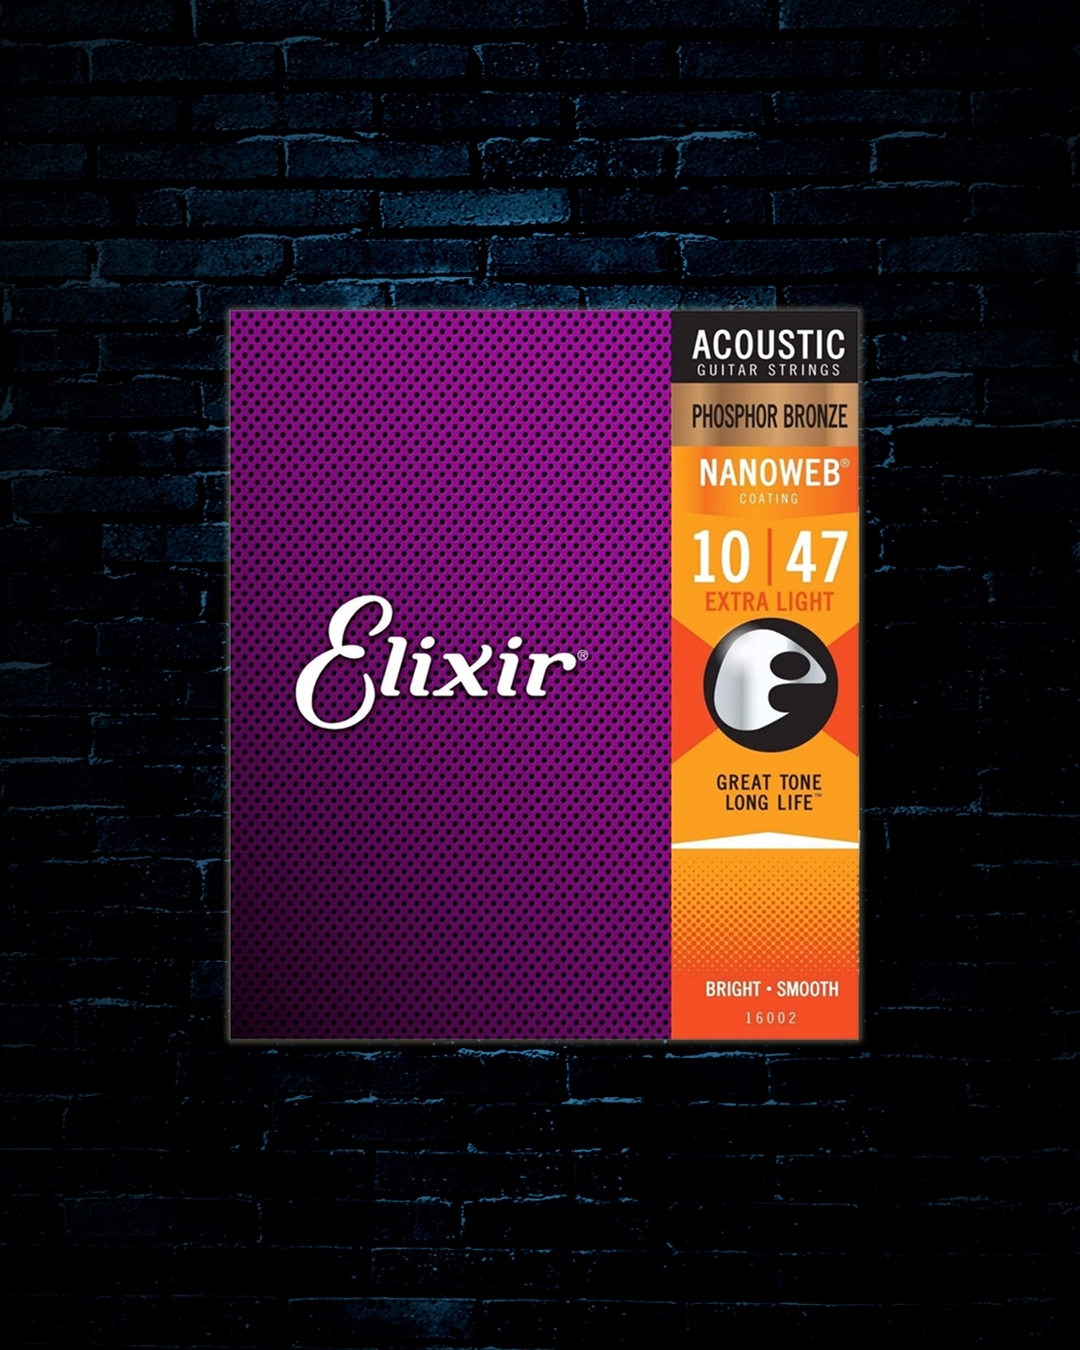 Elixir 16002 Strings Phosphor Bronze Acoustic Guitar Strings w NANOWEB Coating .010-.047 Extra Light